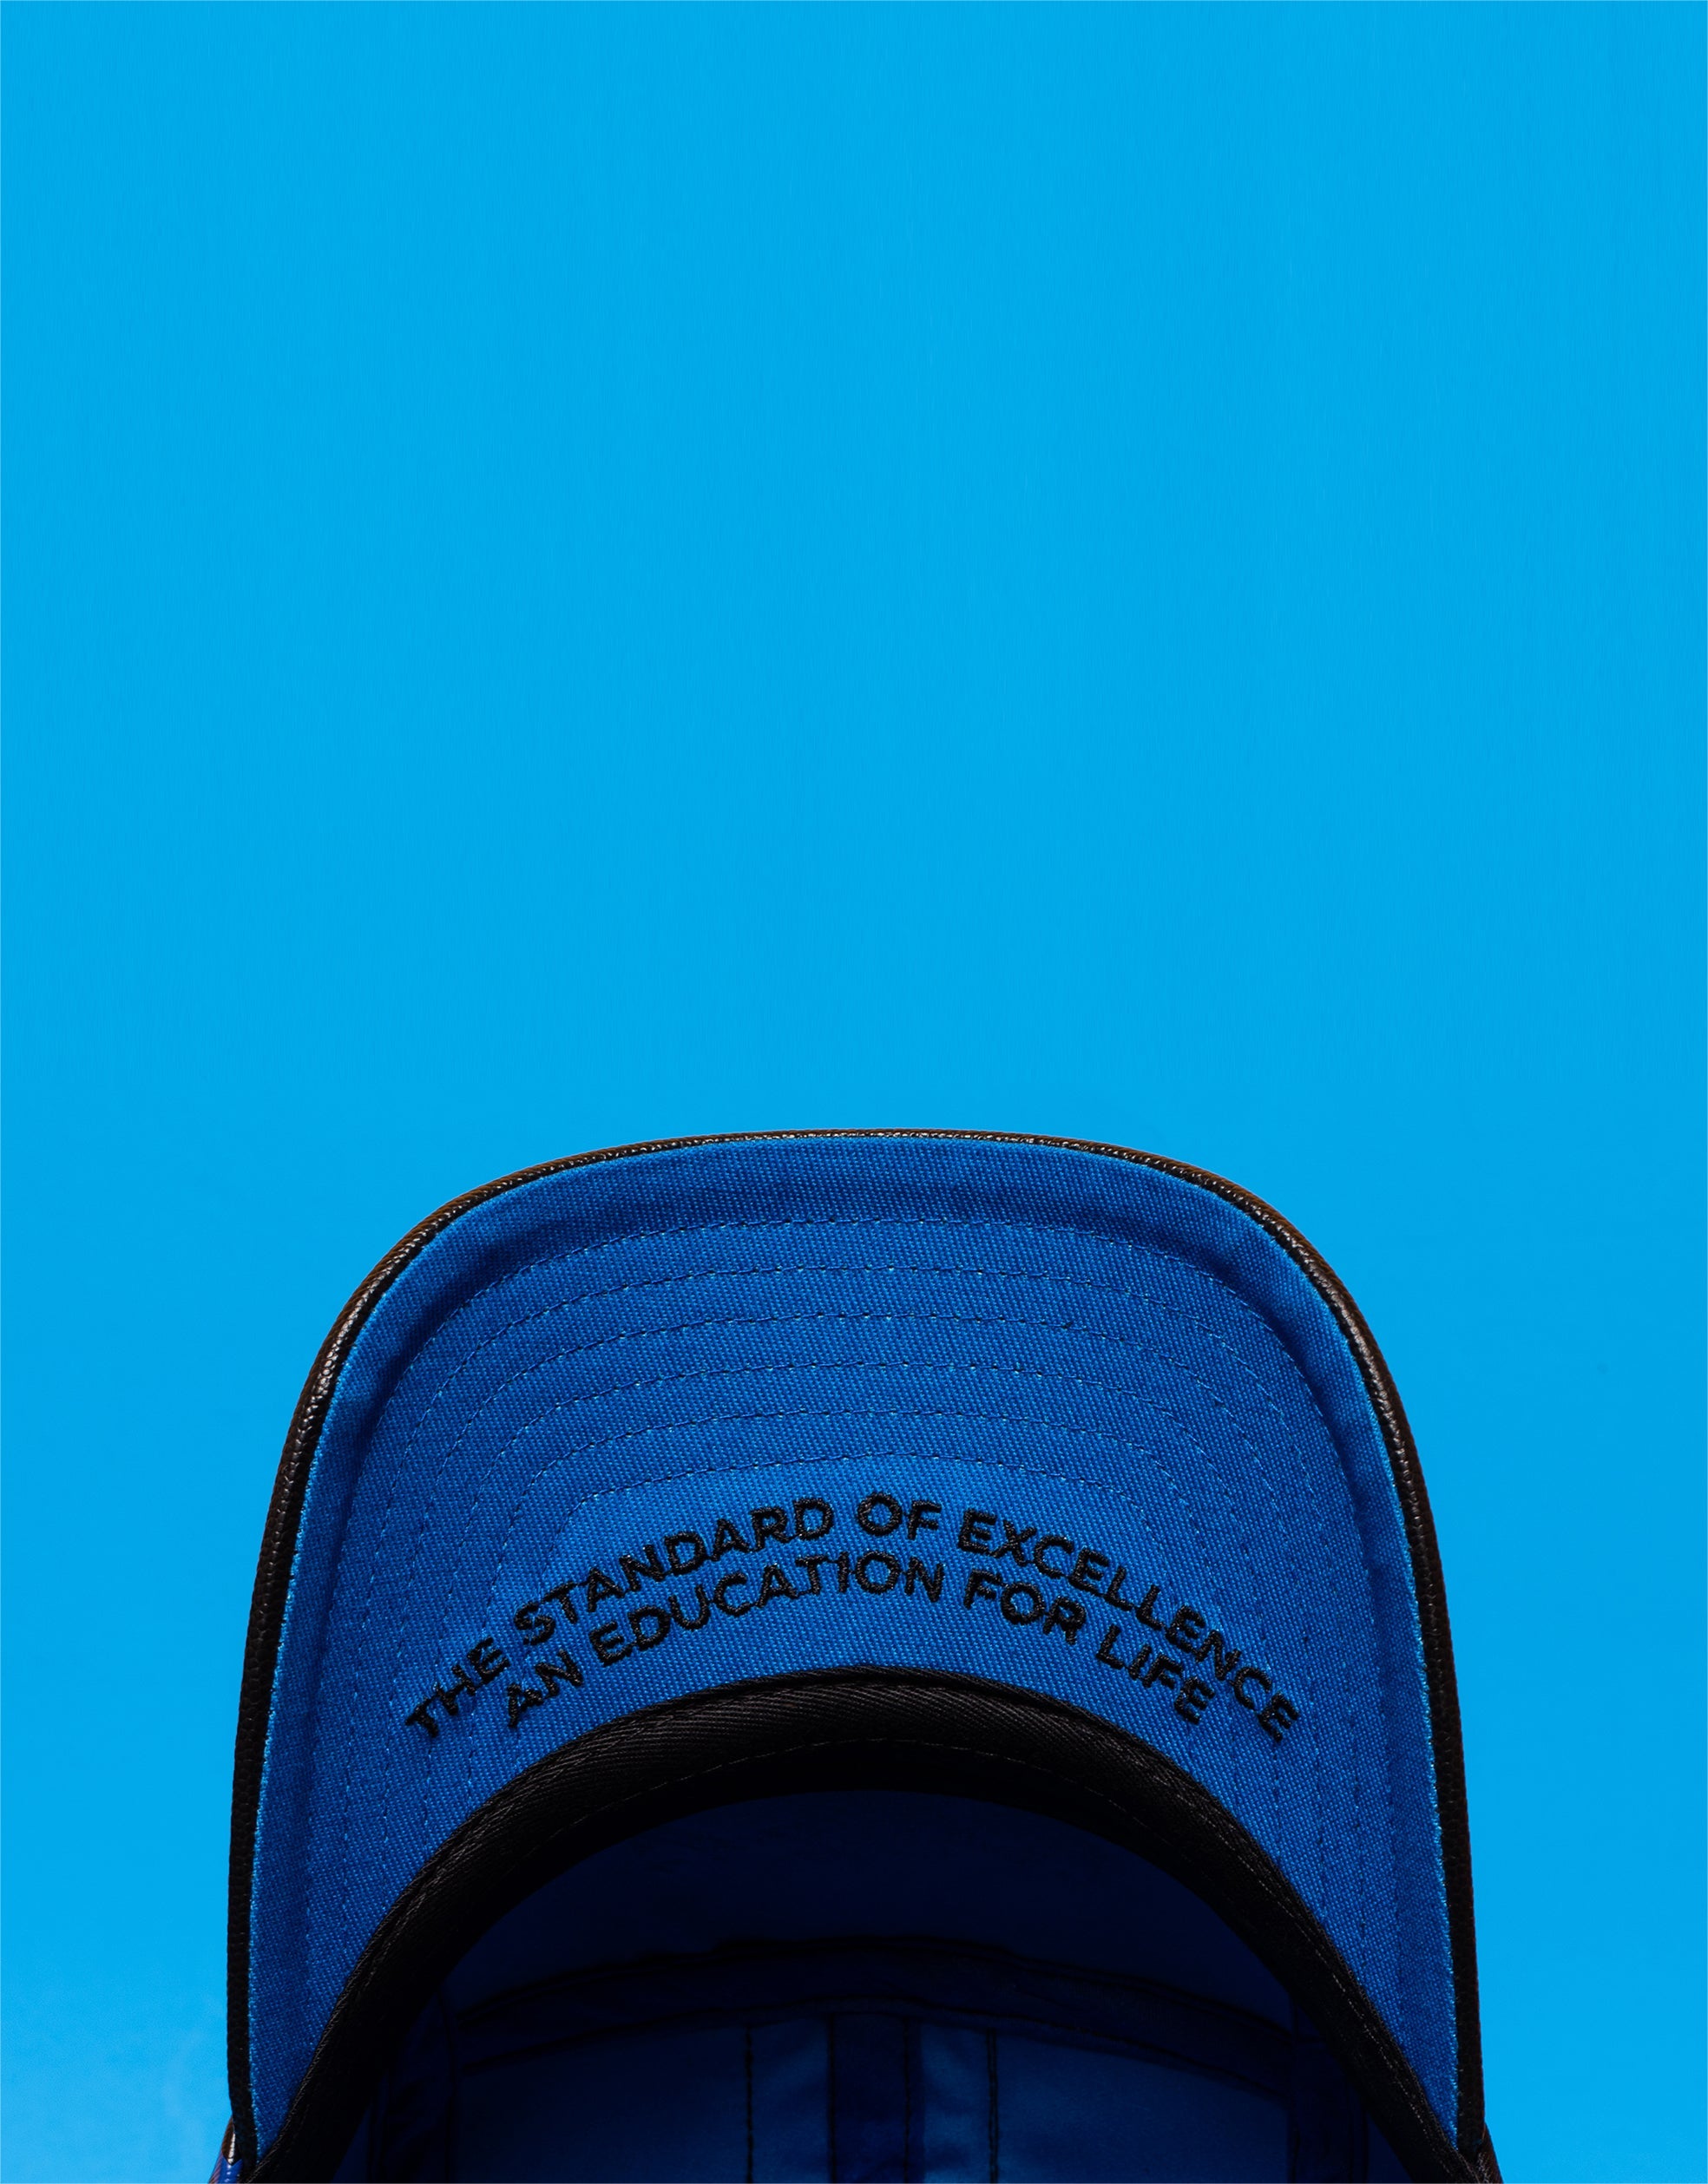 TheYard - BLACKOUT - Hampton University - HBCU Hat